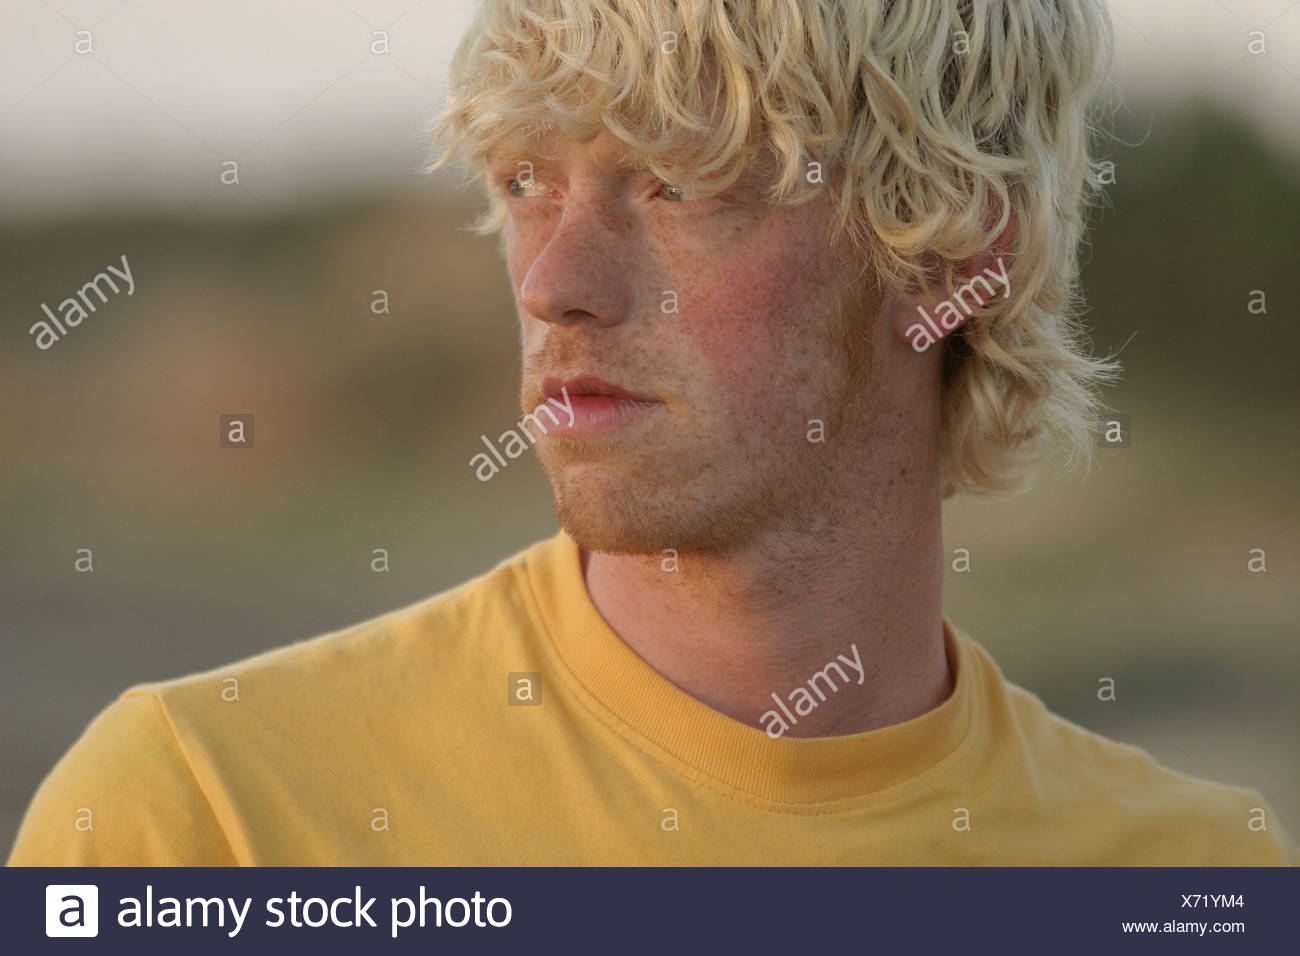 Joung Blond Man With A Three Day Beard 2 Stock Photo Alamy